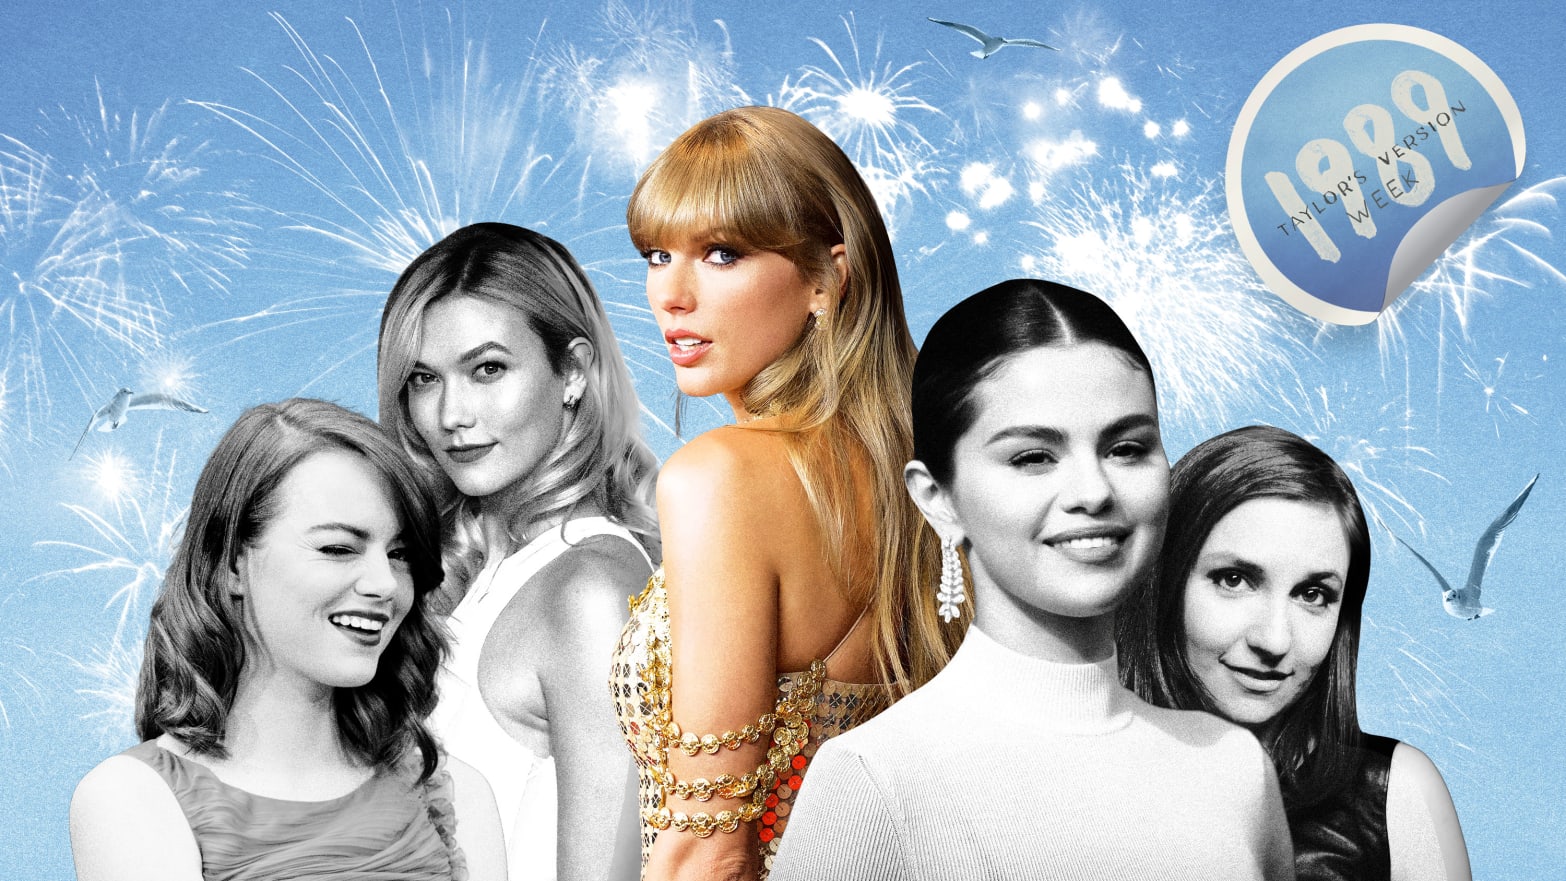 An illustration including photos of Taylor Swift, Karlie Kloss, Emma Stone, Lena Dunham, Selena Gomez, and July 4th Fireworks